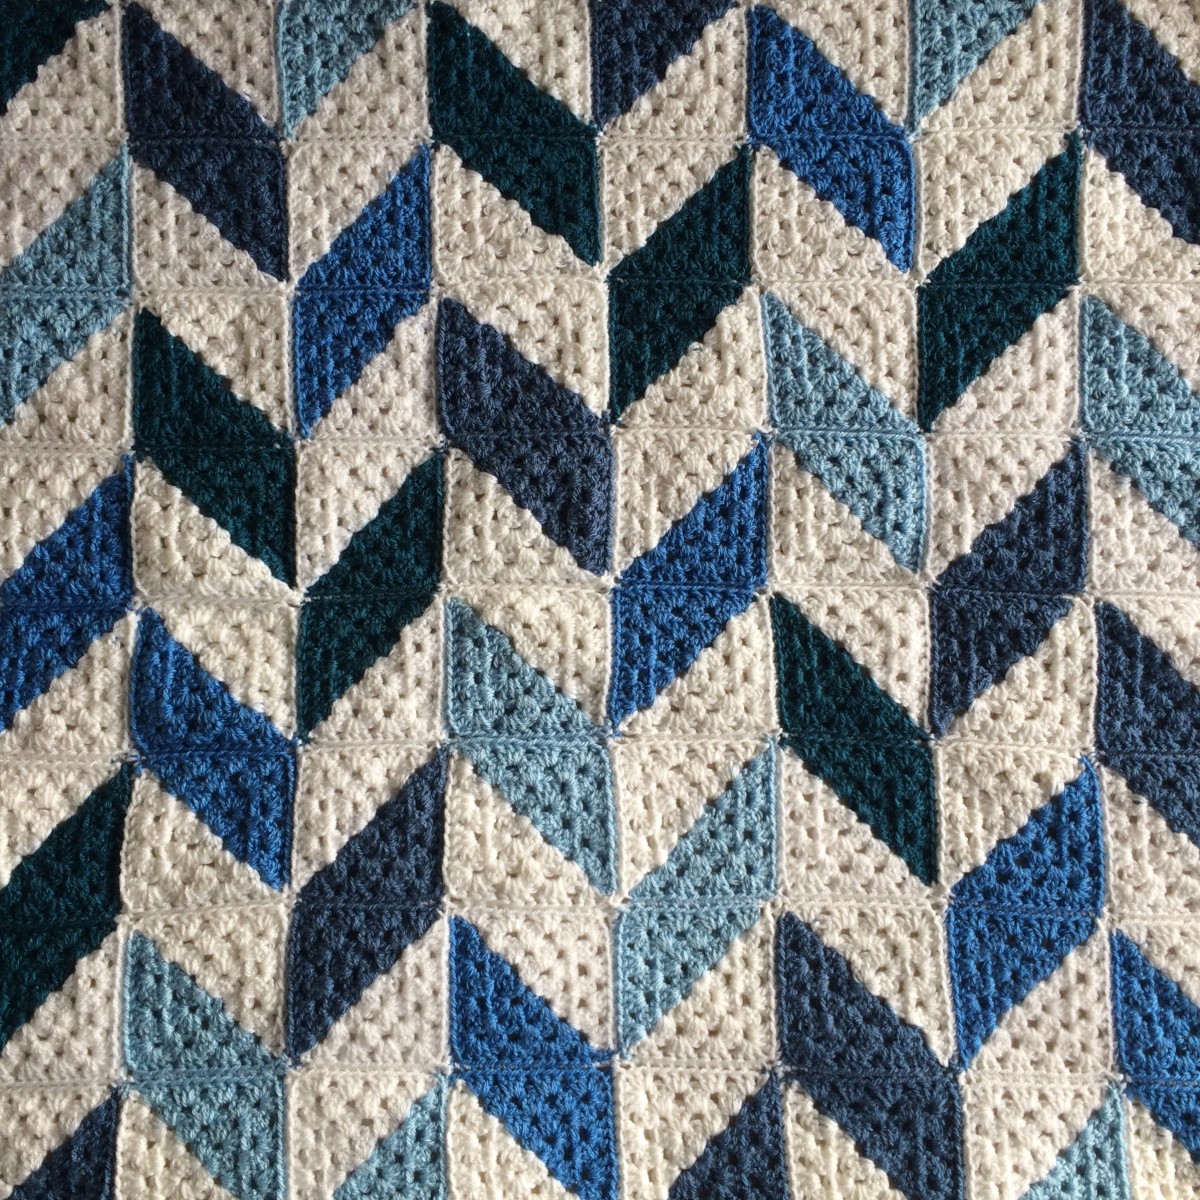 patternpiper blue and white herringbone blanket